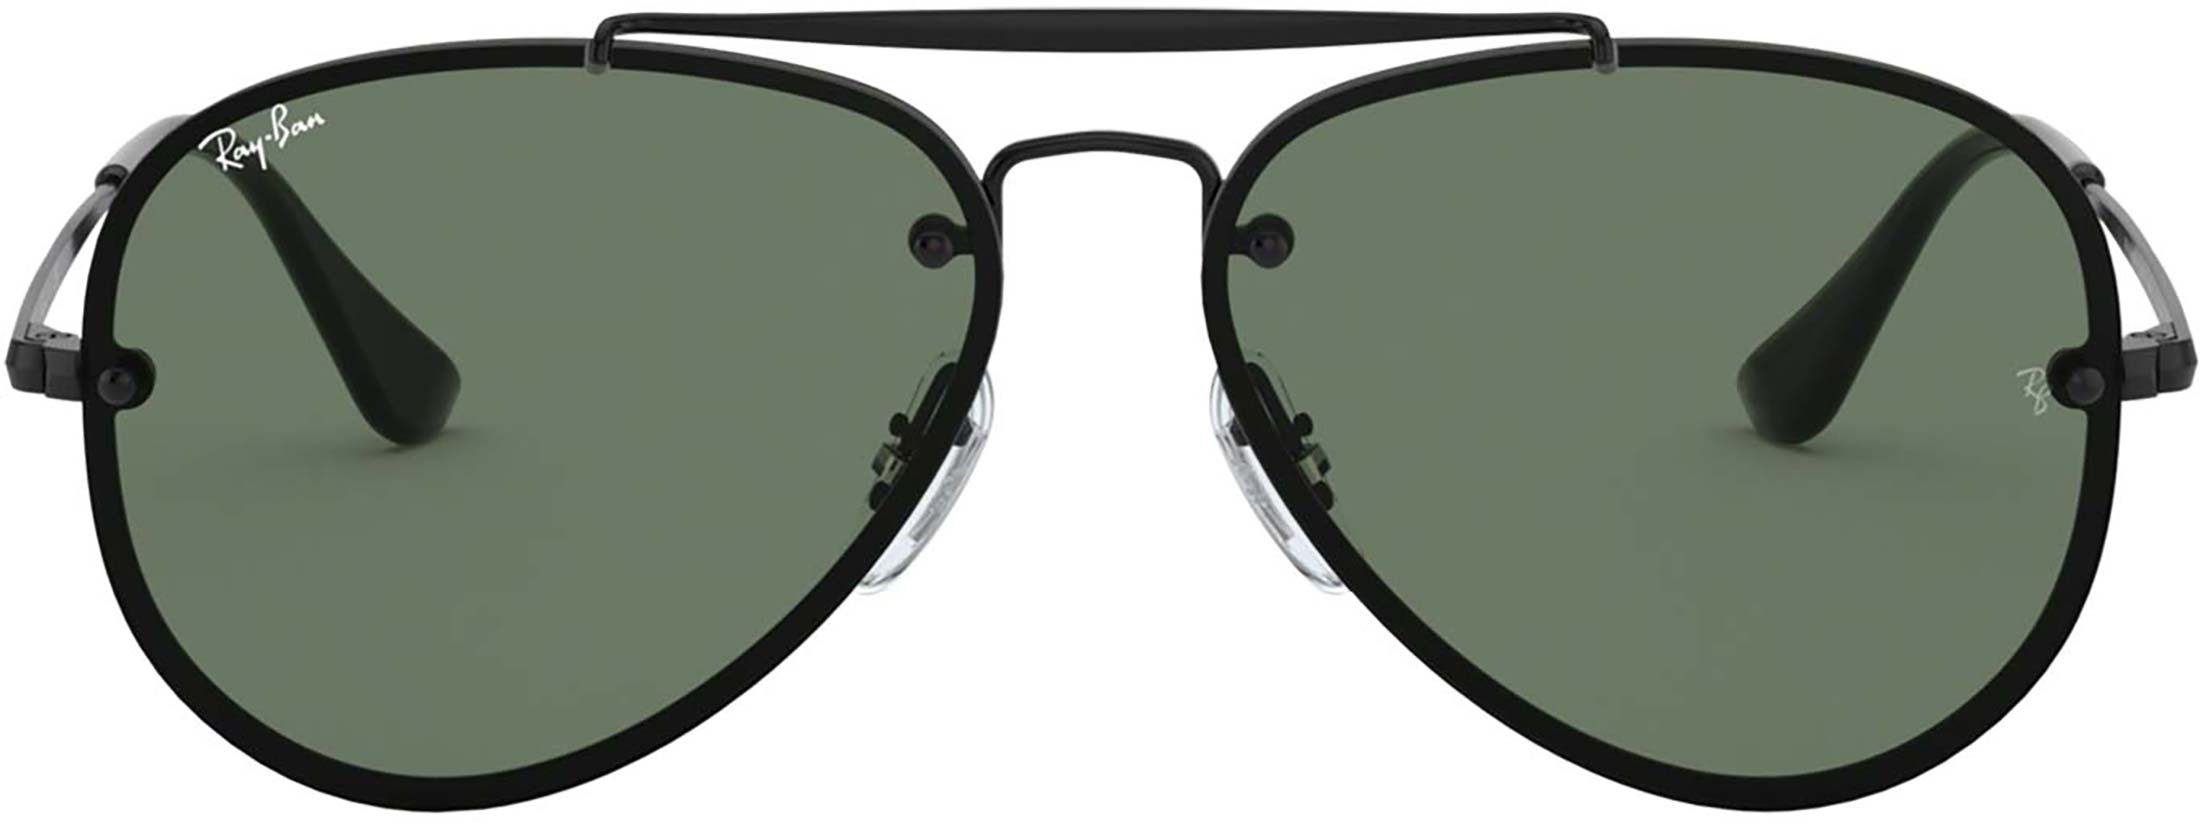 Ray-Ban Aviator solbriller Extra Optical